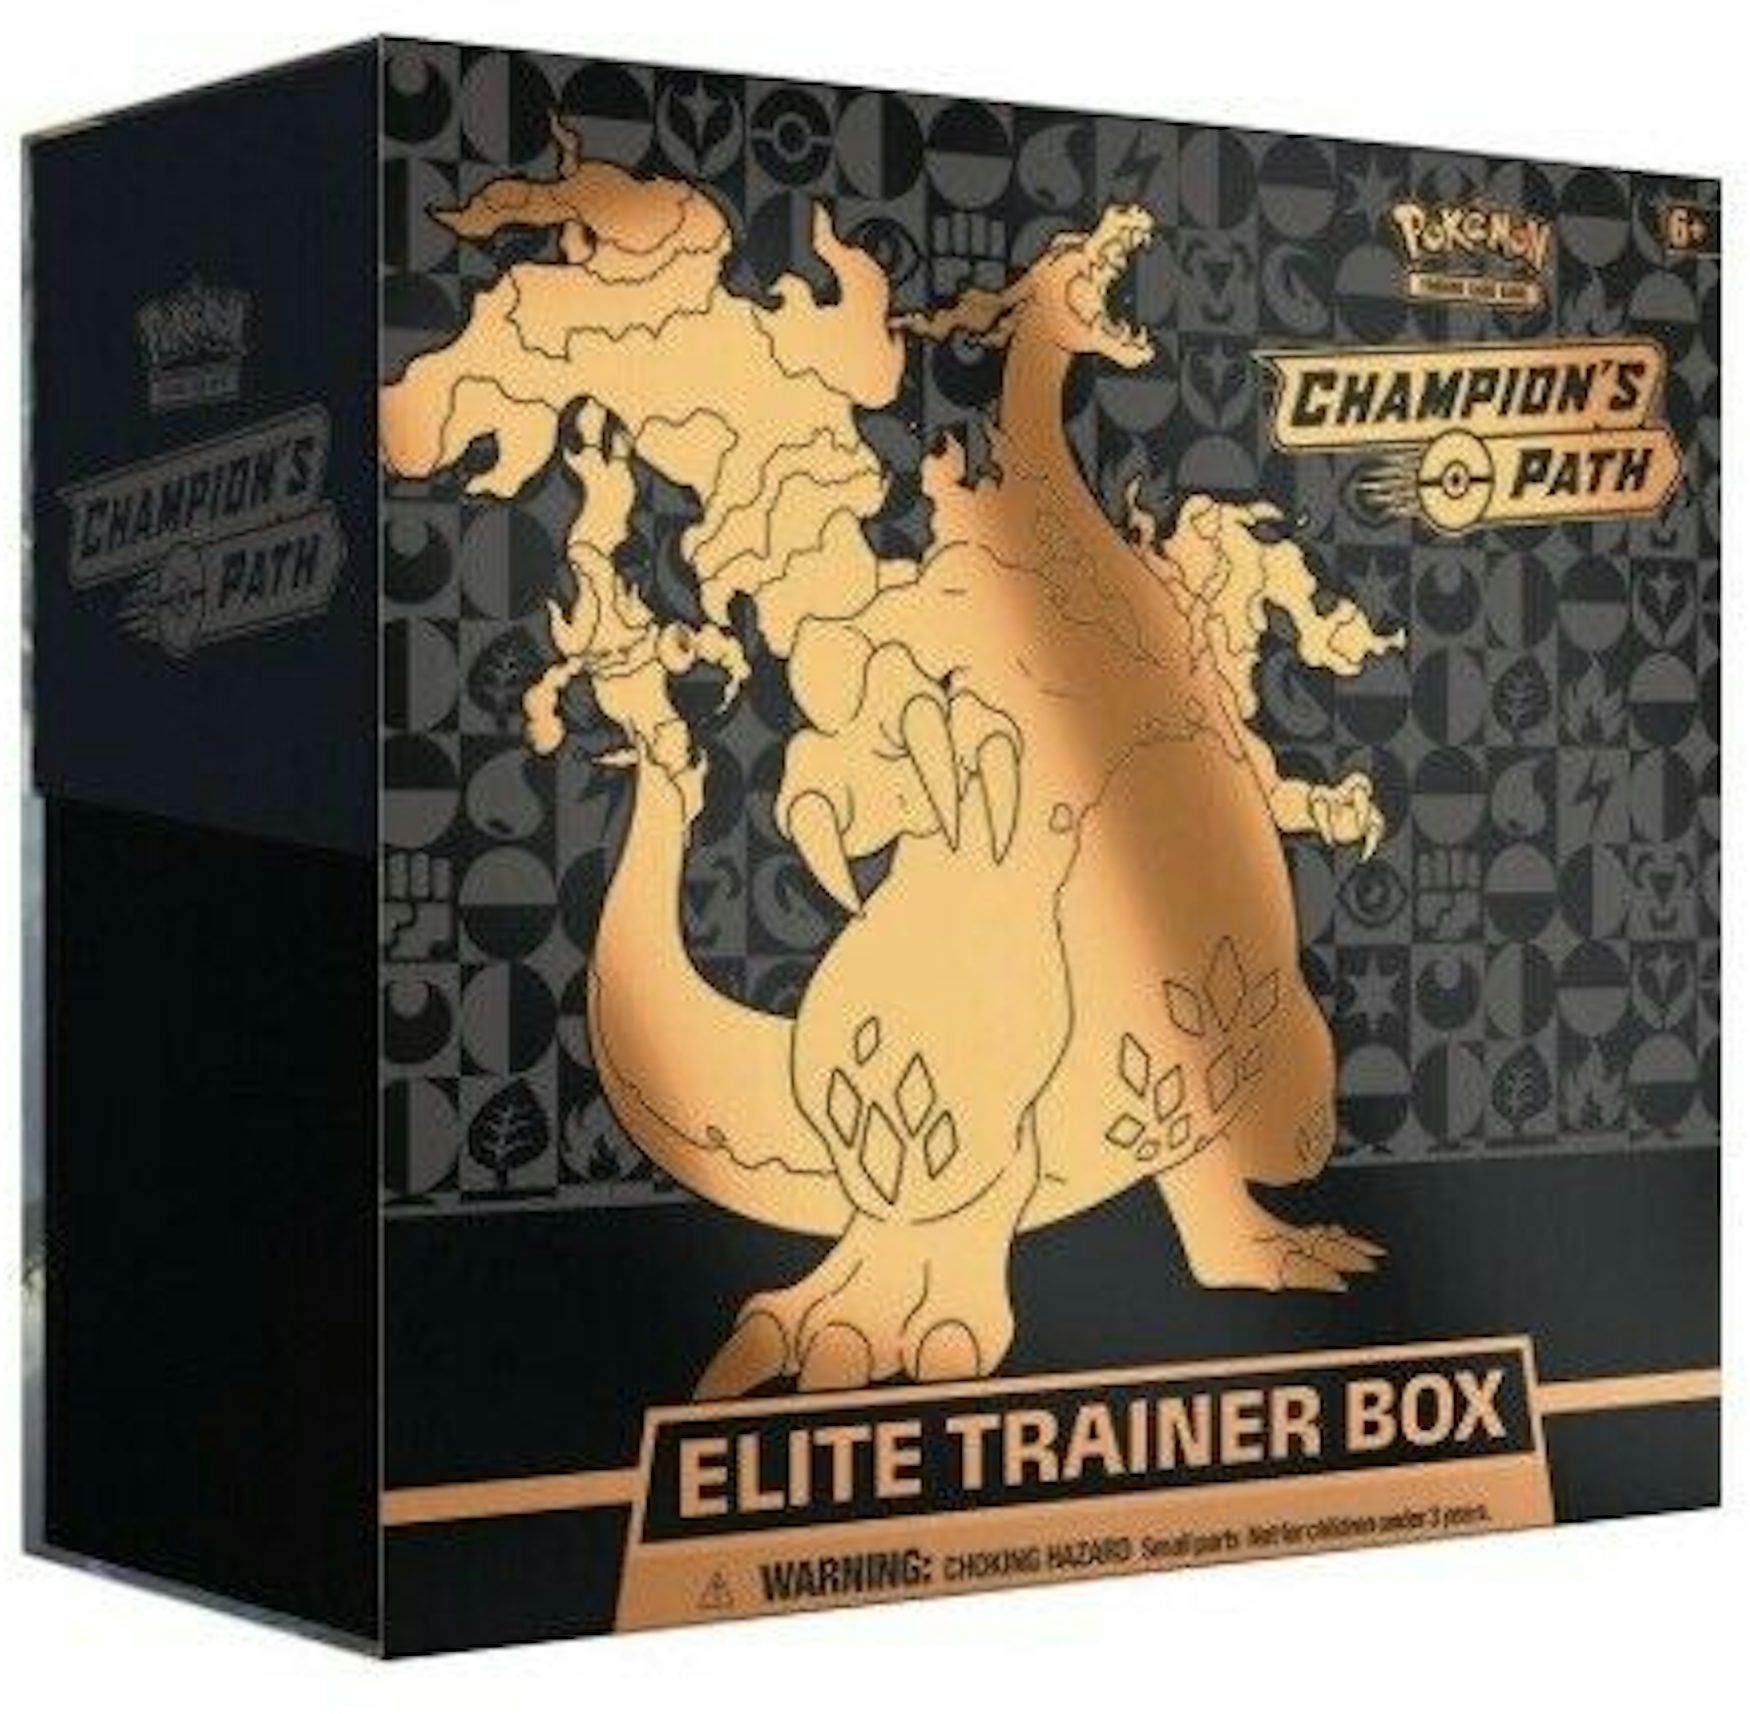 Pokémon TCG Champions Path Elite Trainer Box -